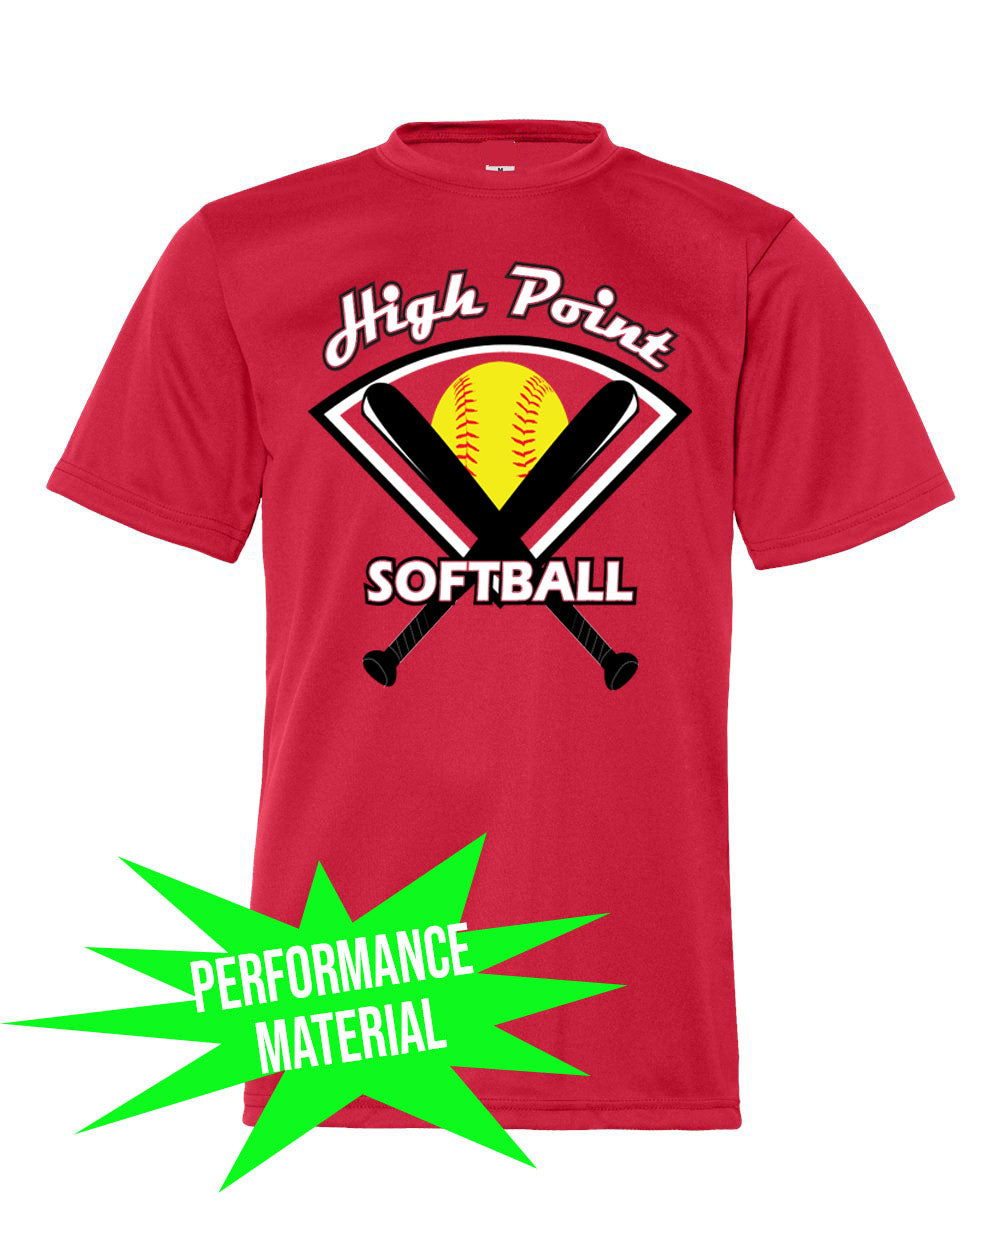 High Point Softball Performance Material design 4 T-Shirt